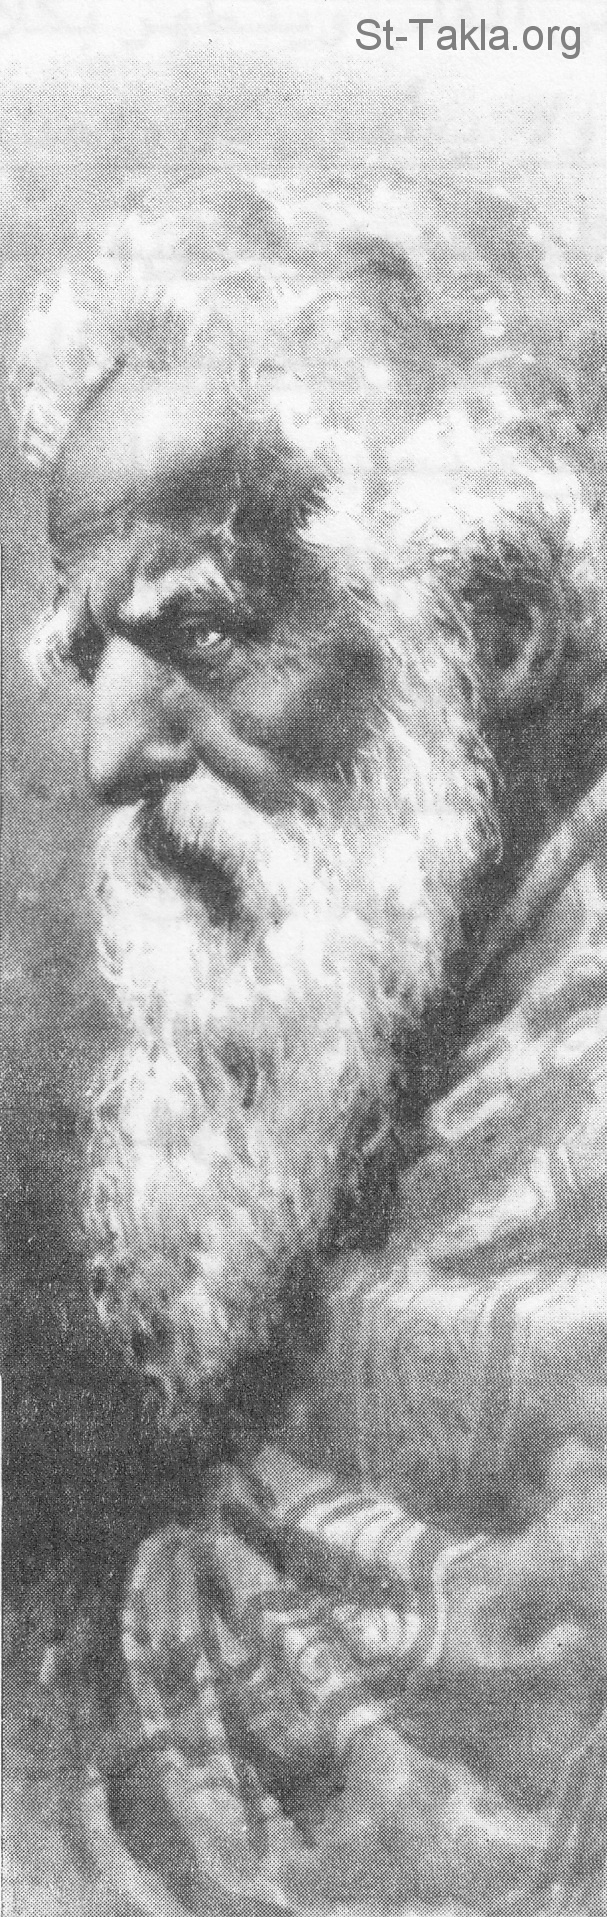 St-Takla.org Image: A old man, a prophet صورة في موقع الأنبا تكلا: رجل عجوز، نبي